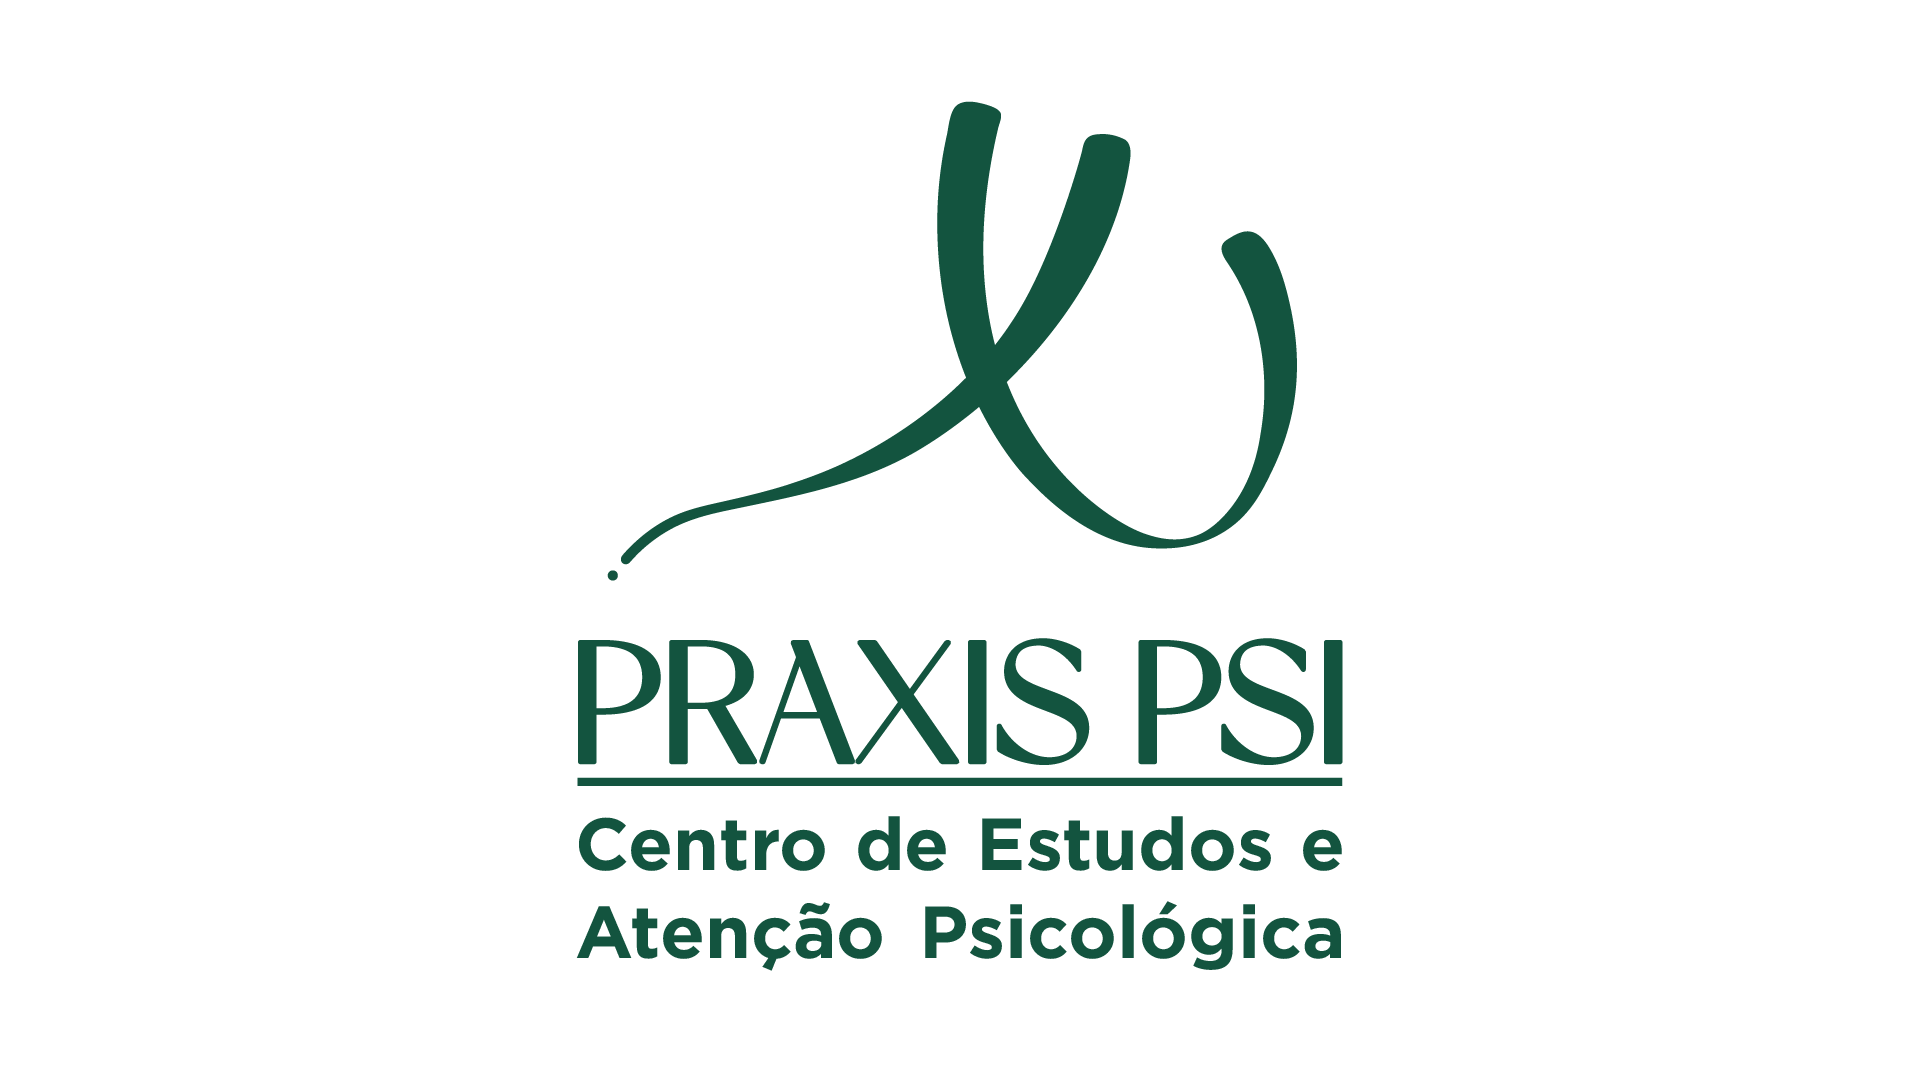 PRAXIS PSI